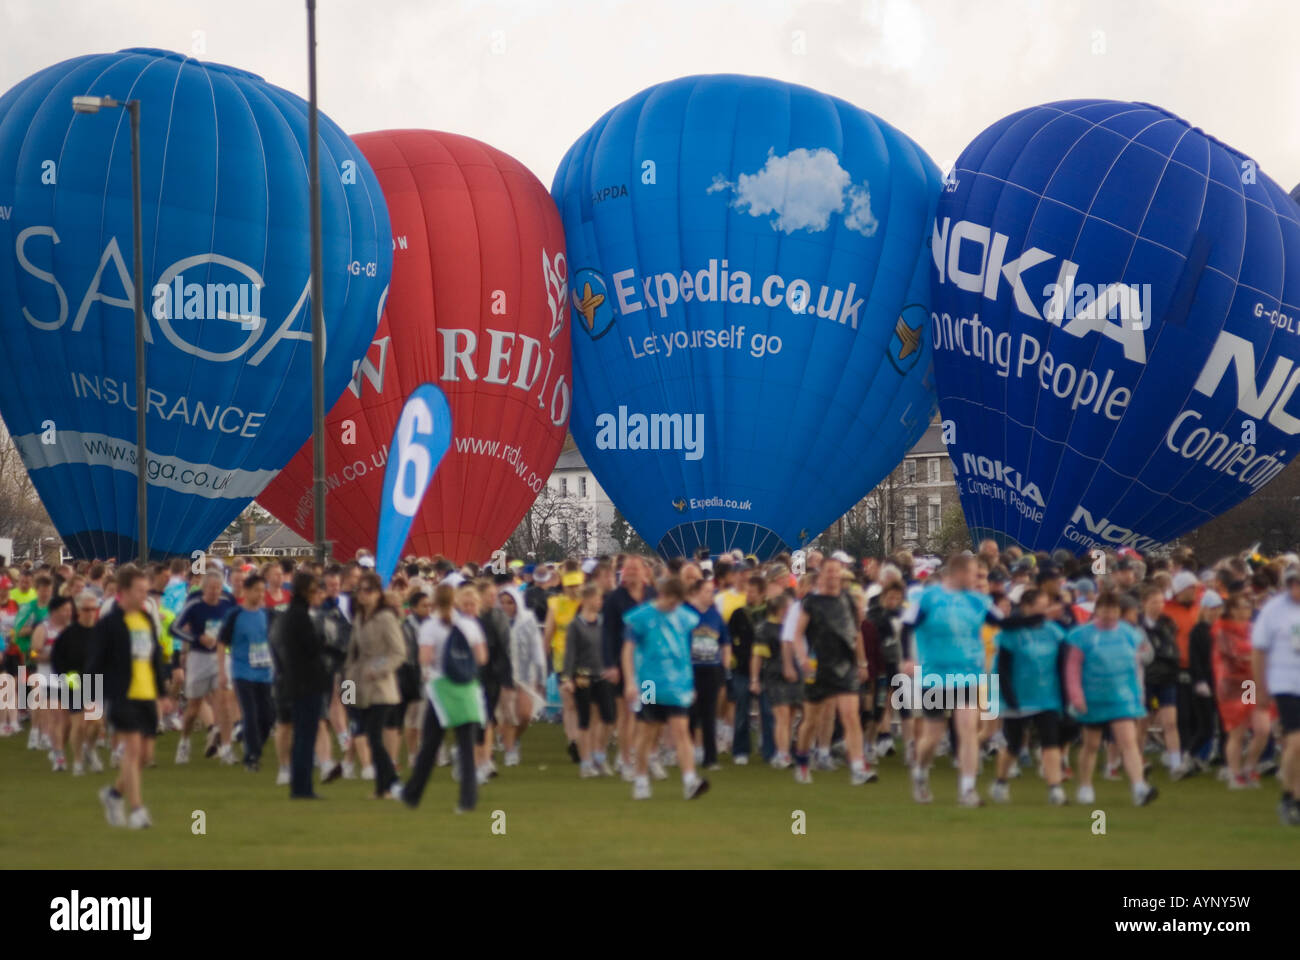 Hot air balloon promotional sponsorship balloons Saga Insurance Redrow Expedia co uk Blackheath South London SE21 London UK    London Stock Photo